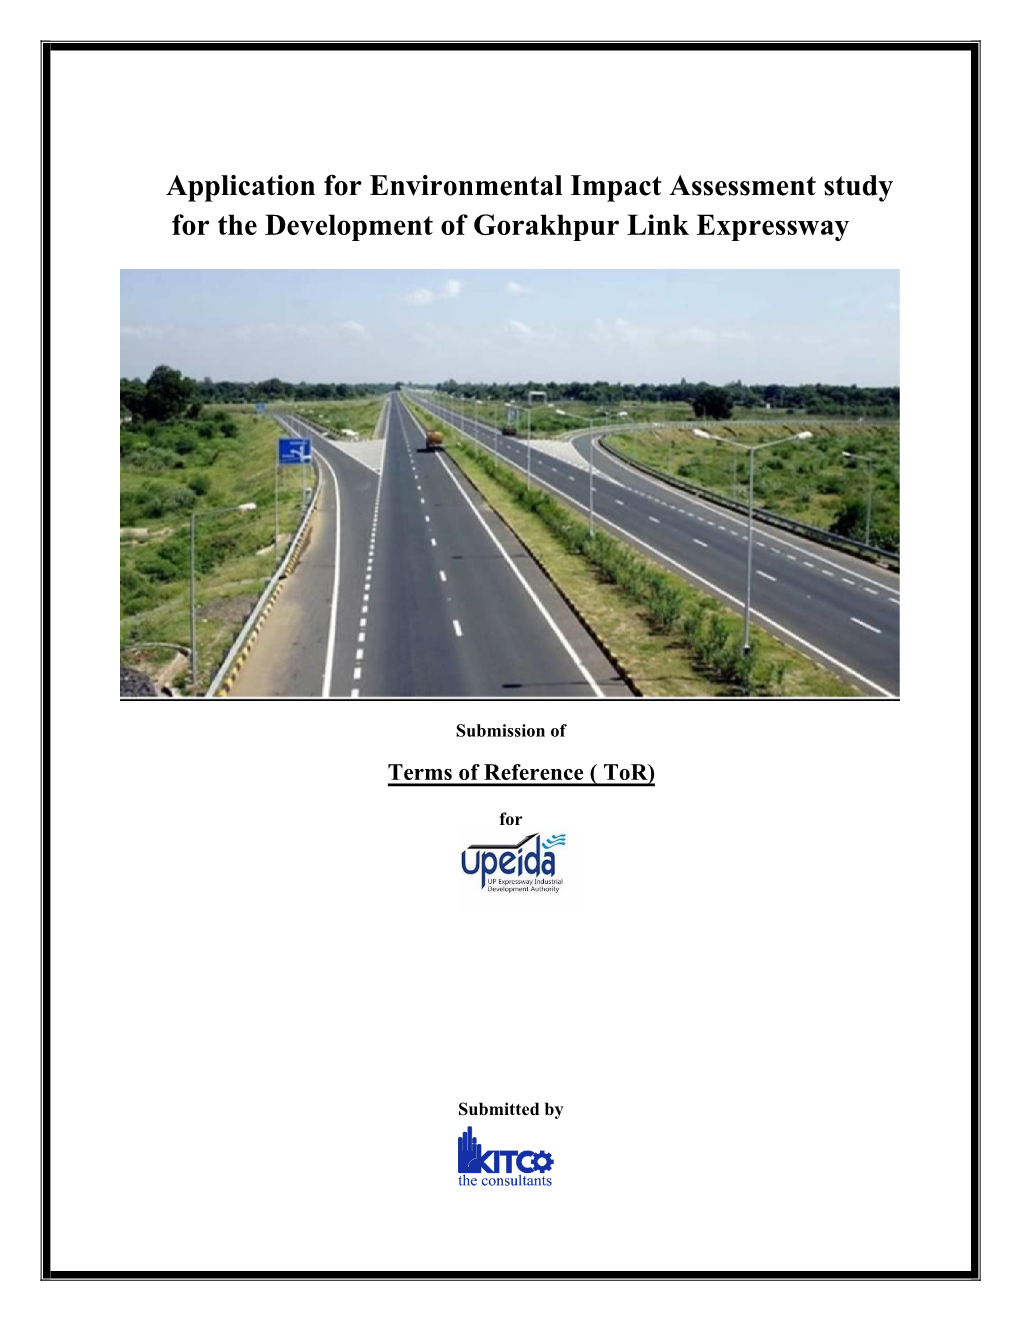 Application for Environmental Impact Assessment Study for the Development of Gorakhpur Link Expressway